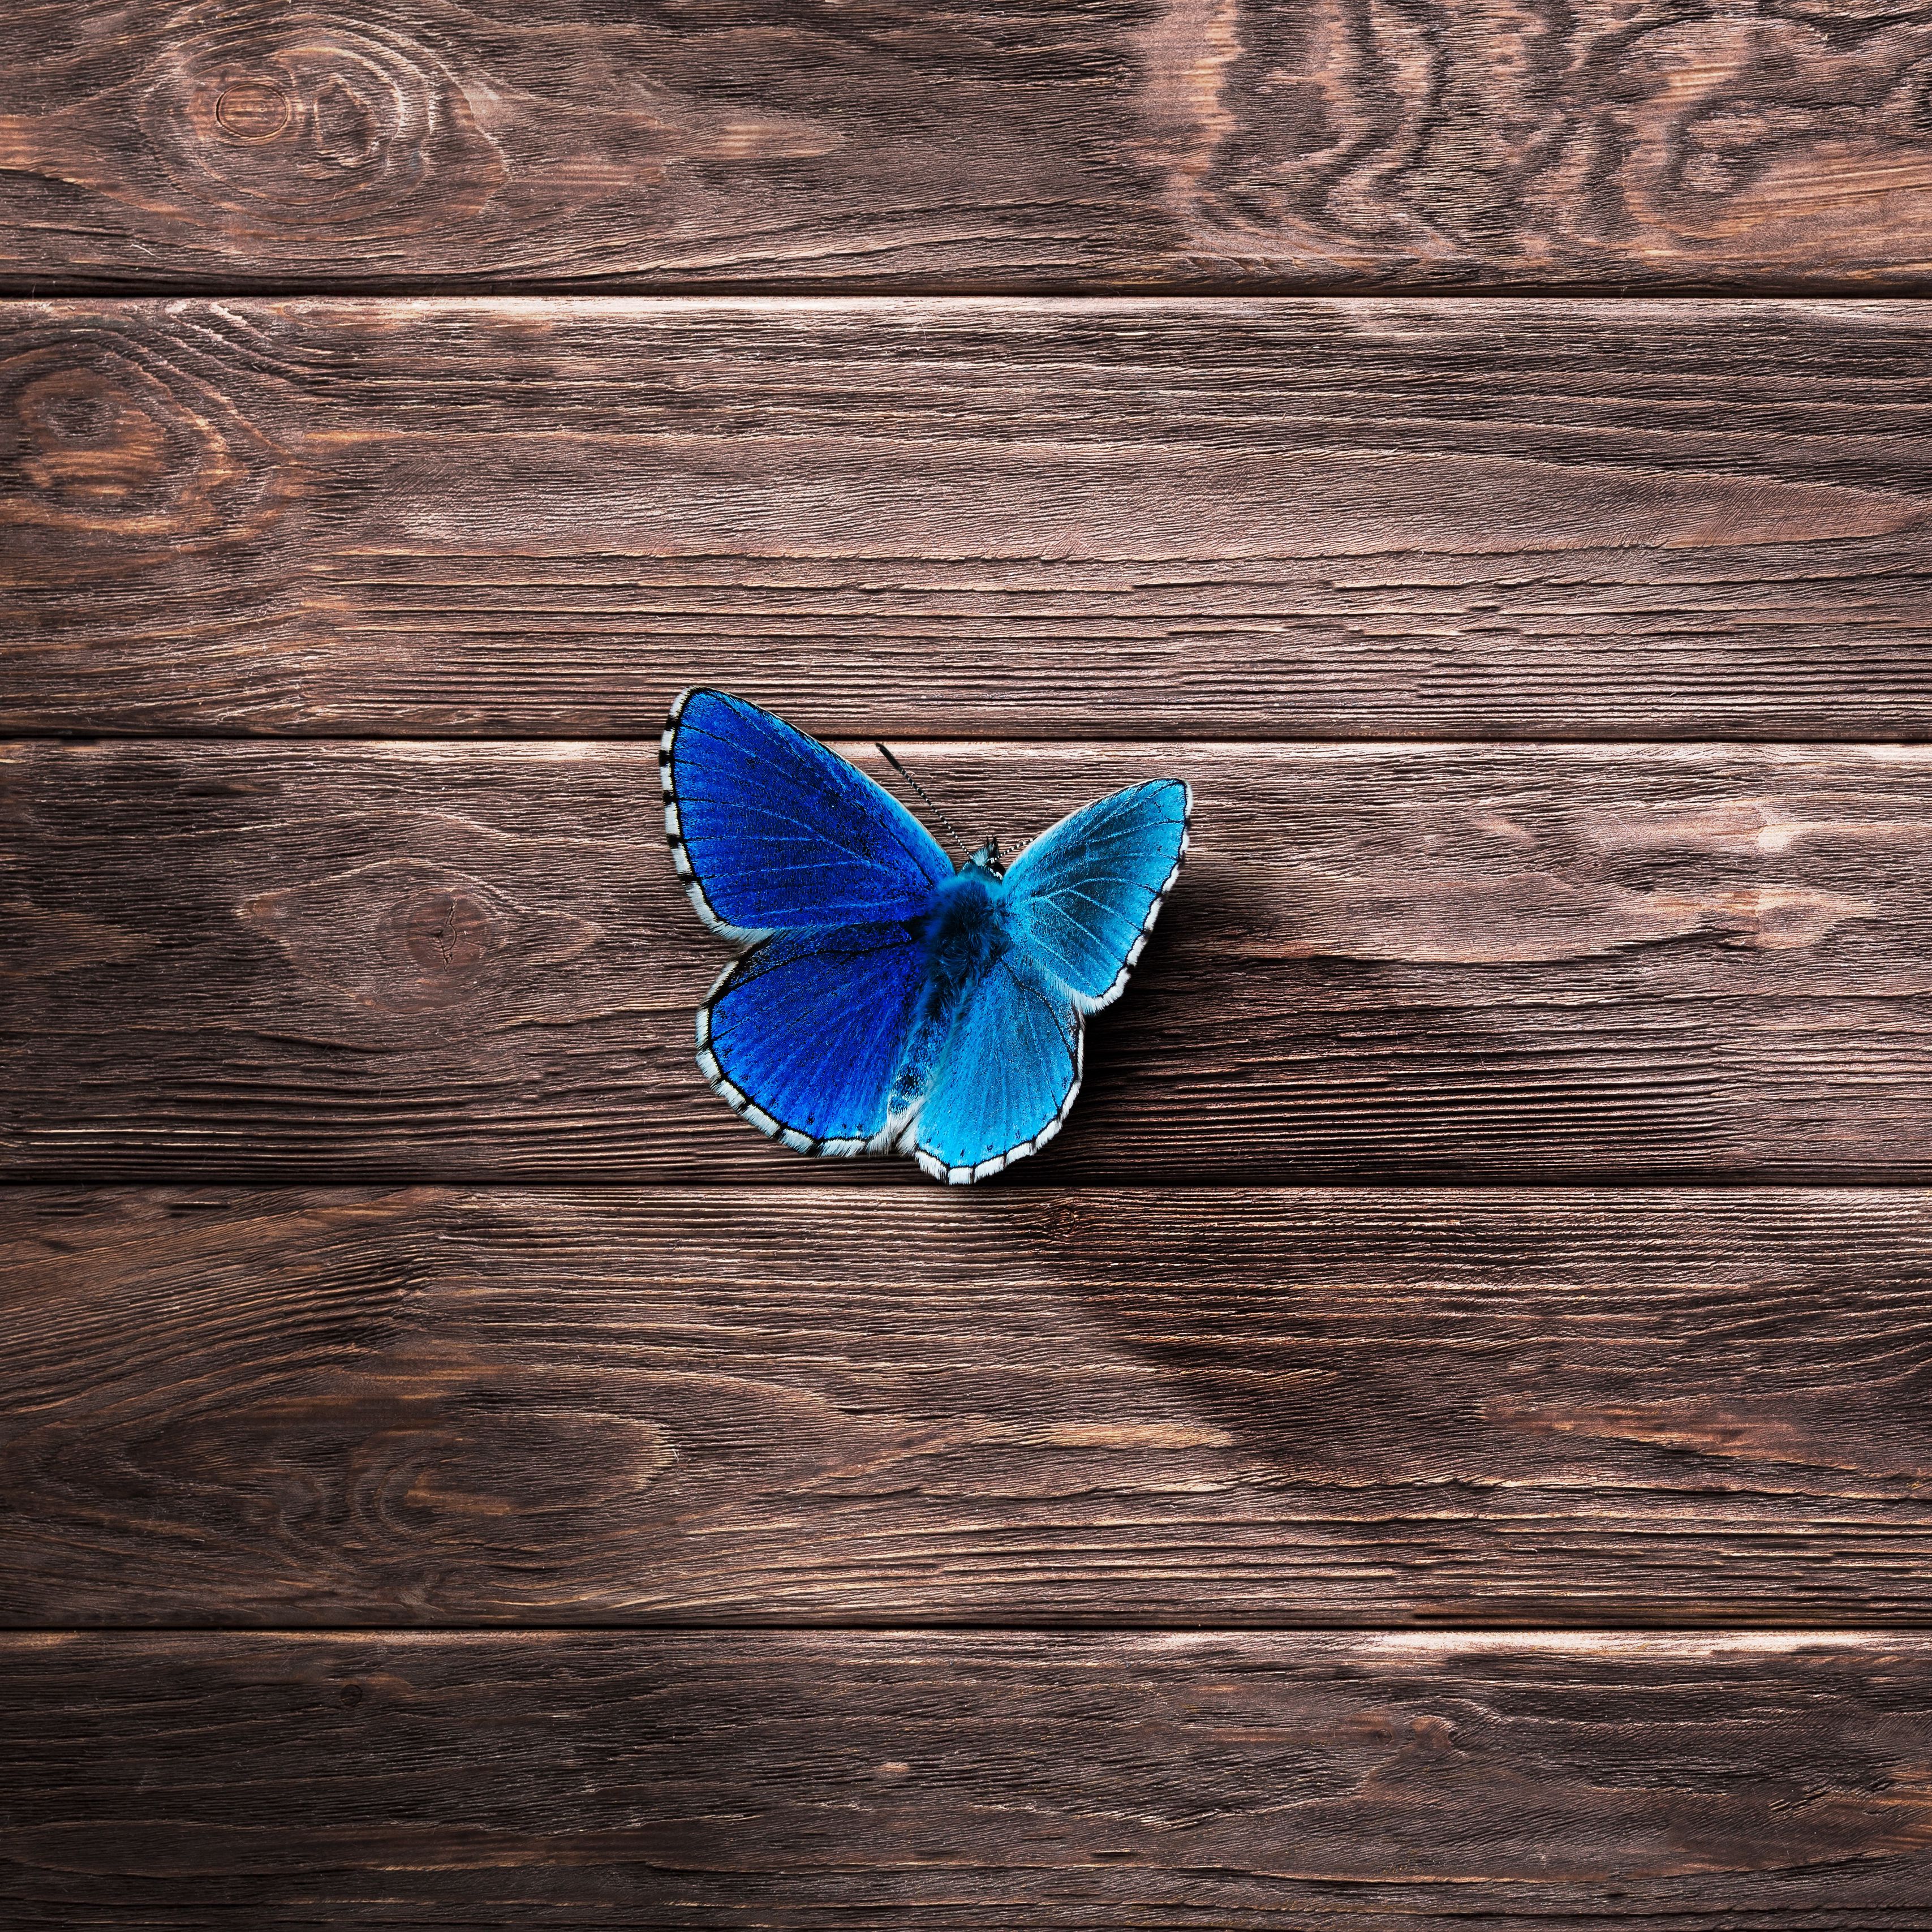 3415x3415 Wallpaper butterfly, surface, wooden